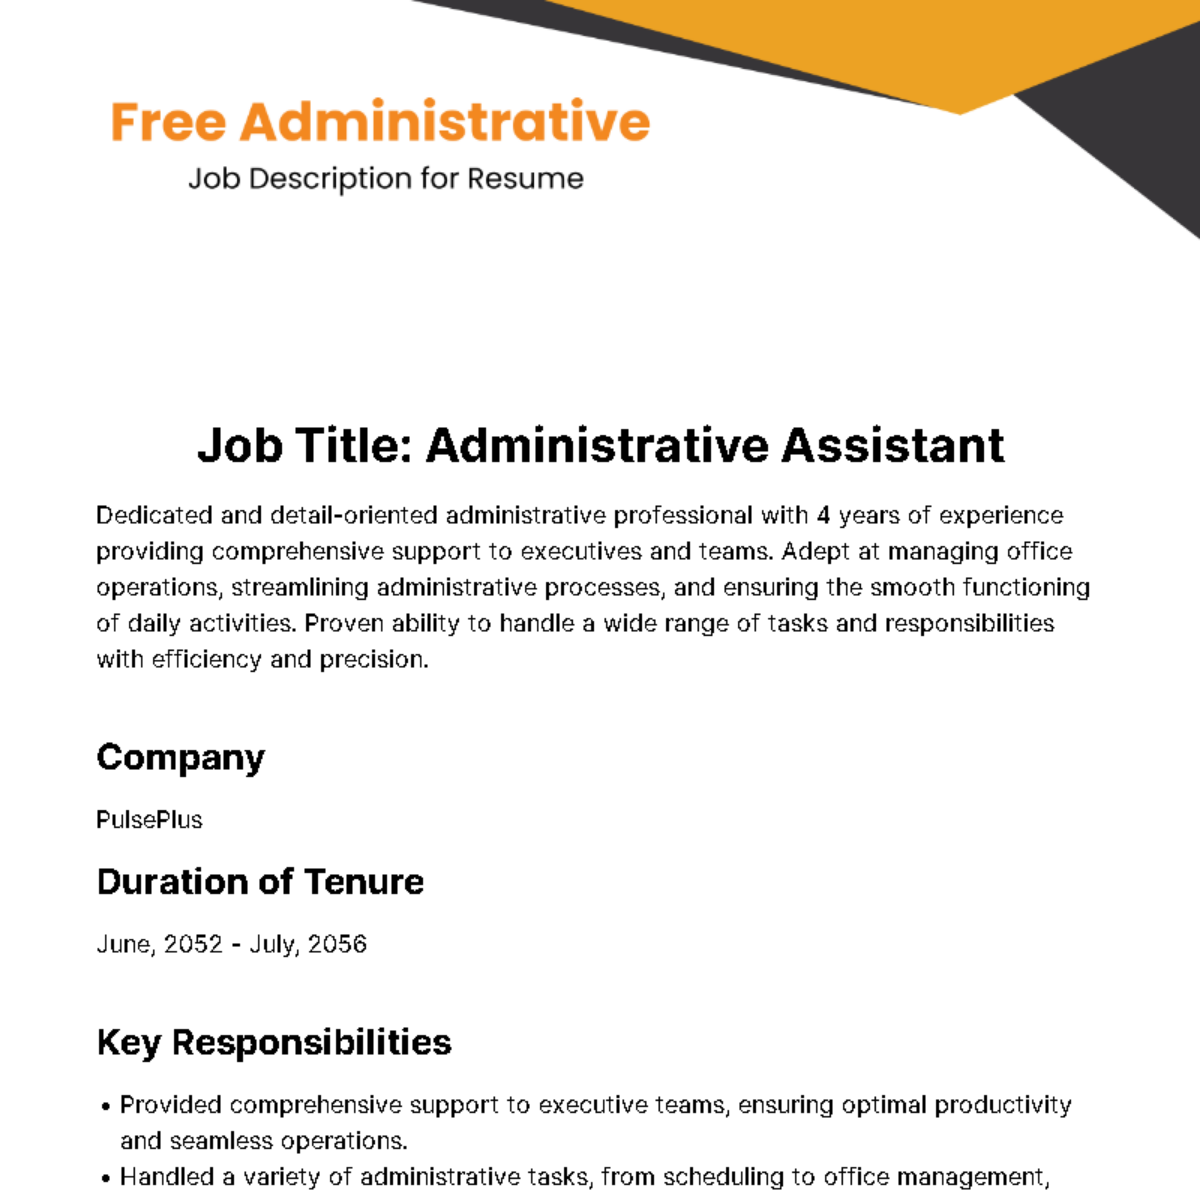 Administrative Job Description for Resume Template